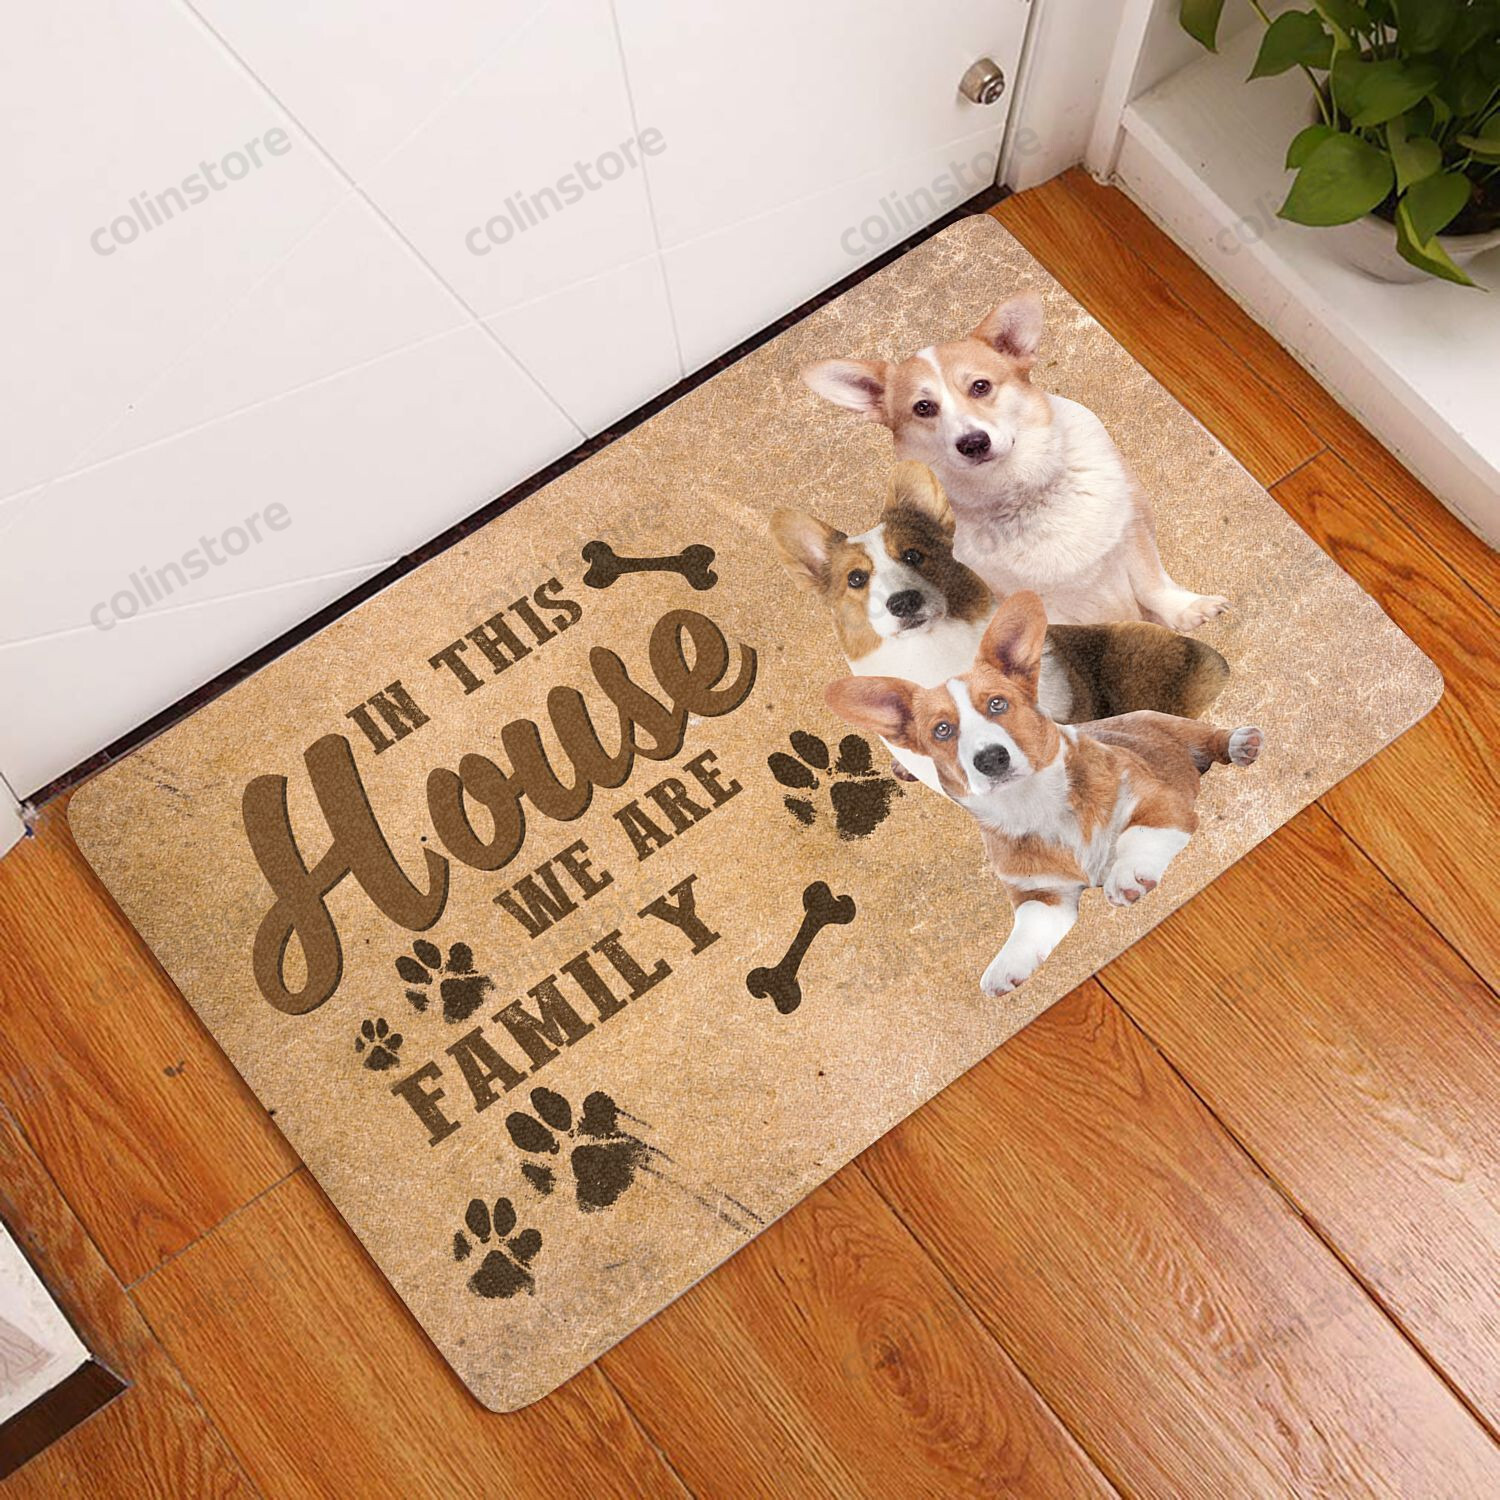 Amazing Cardigan Welsh Corgi Family - Dog Doormat Welcome Mat